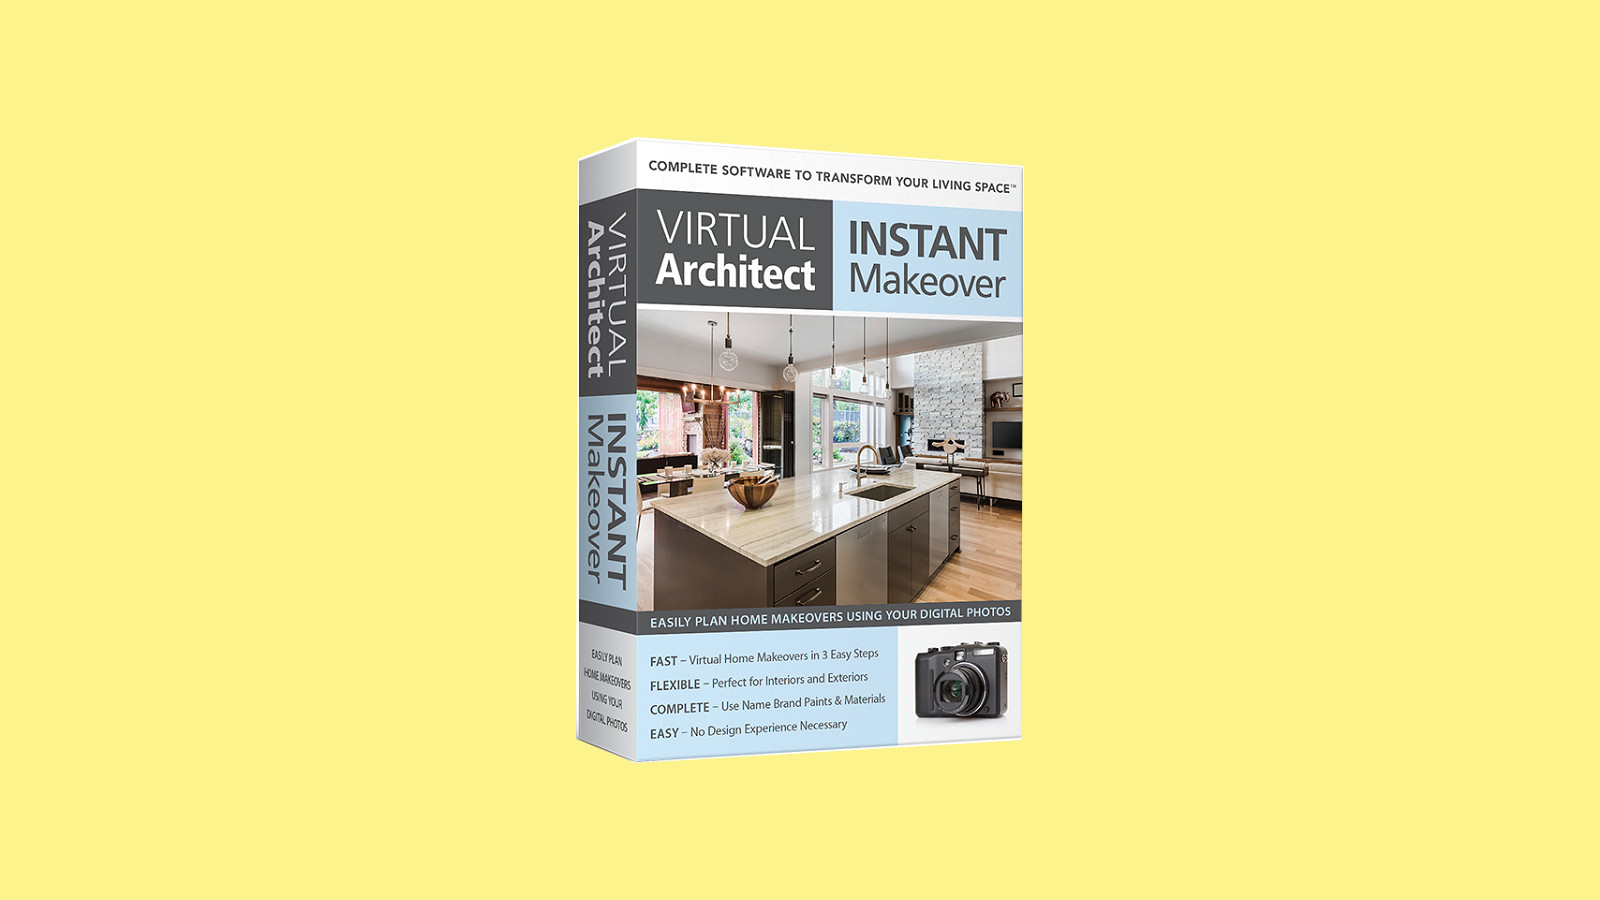 Virtual Architect Instant Makeover 2.0 CD Key 17.63 $